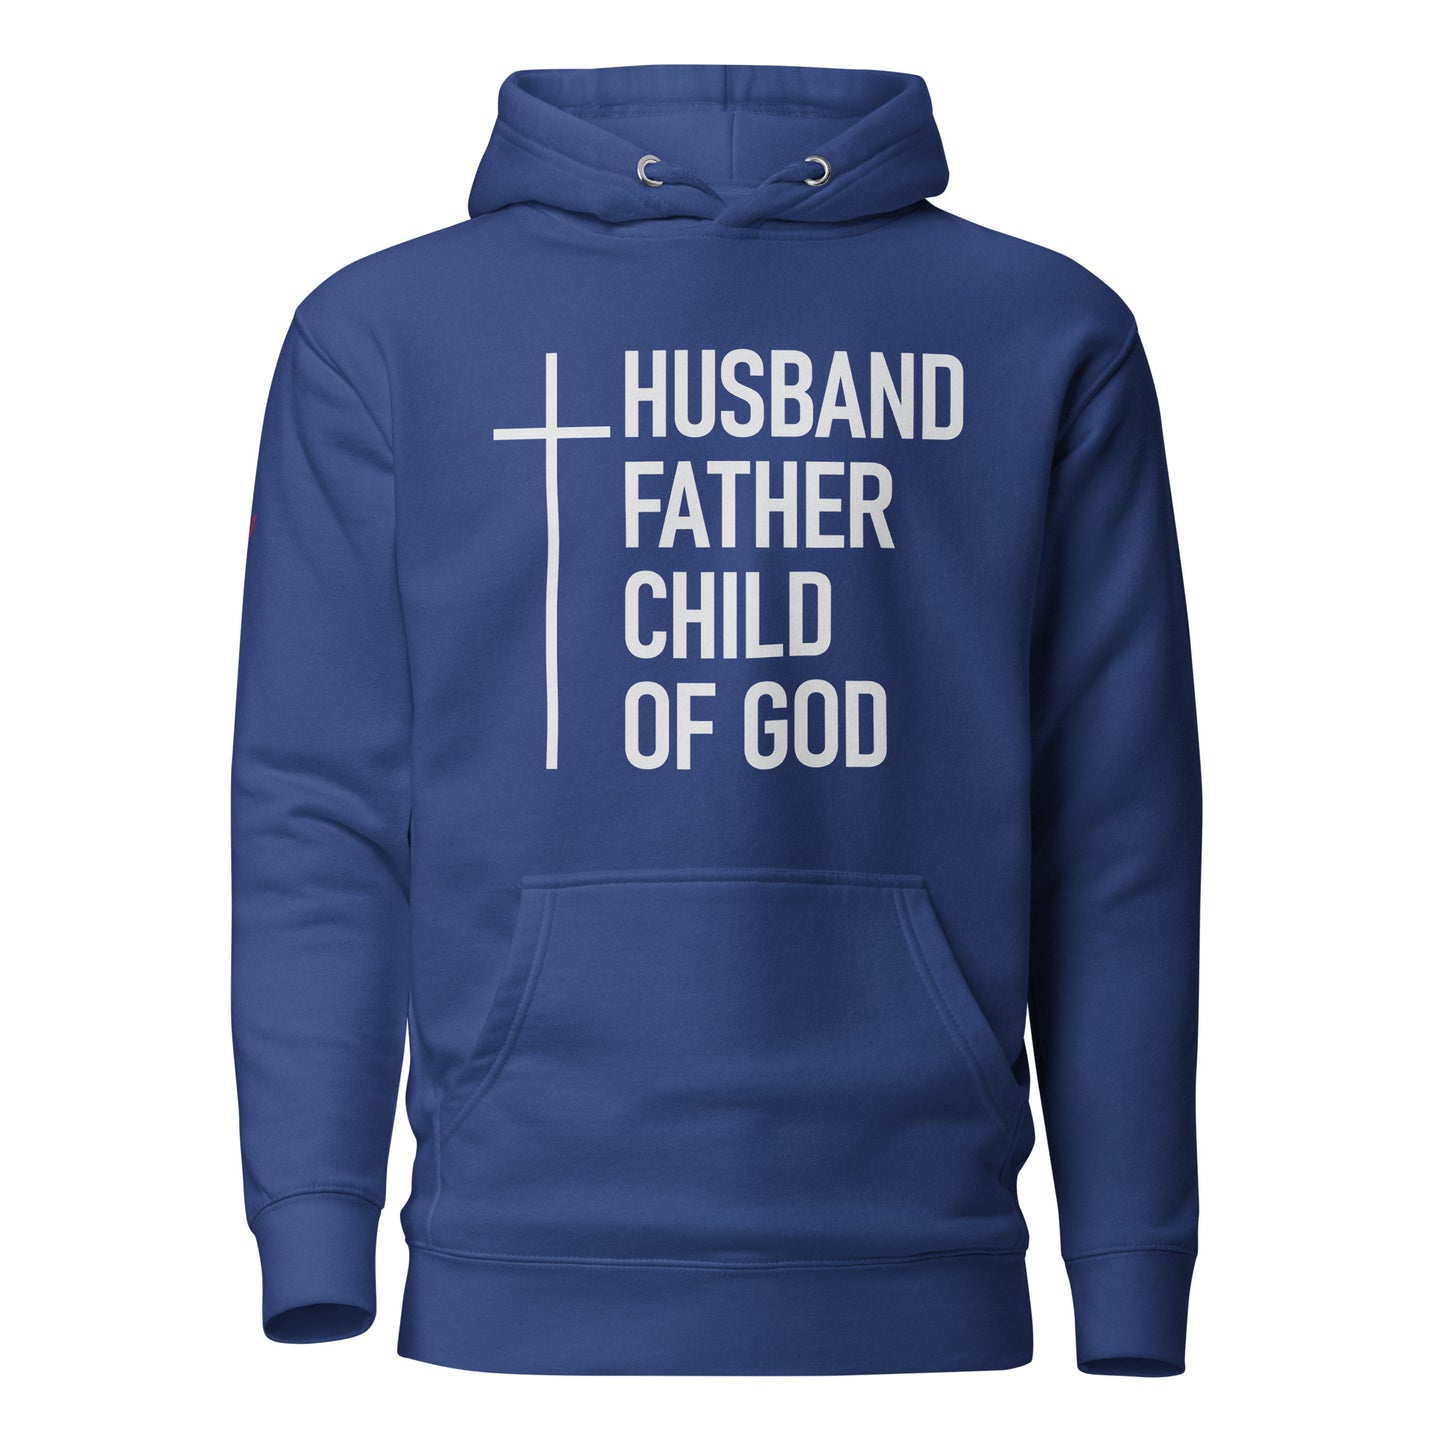 Husband Child of God Hoodie